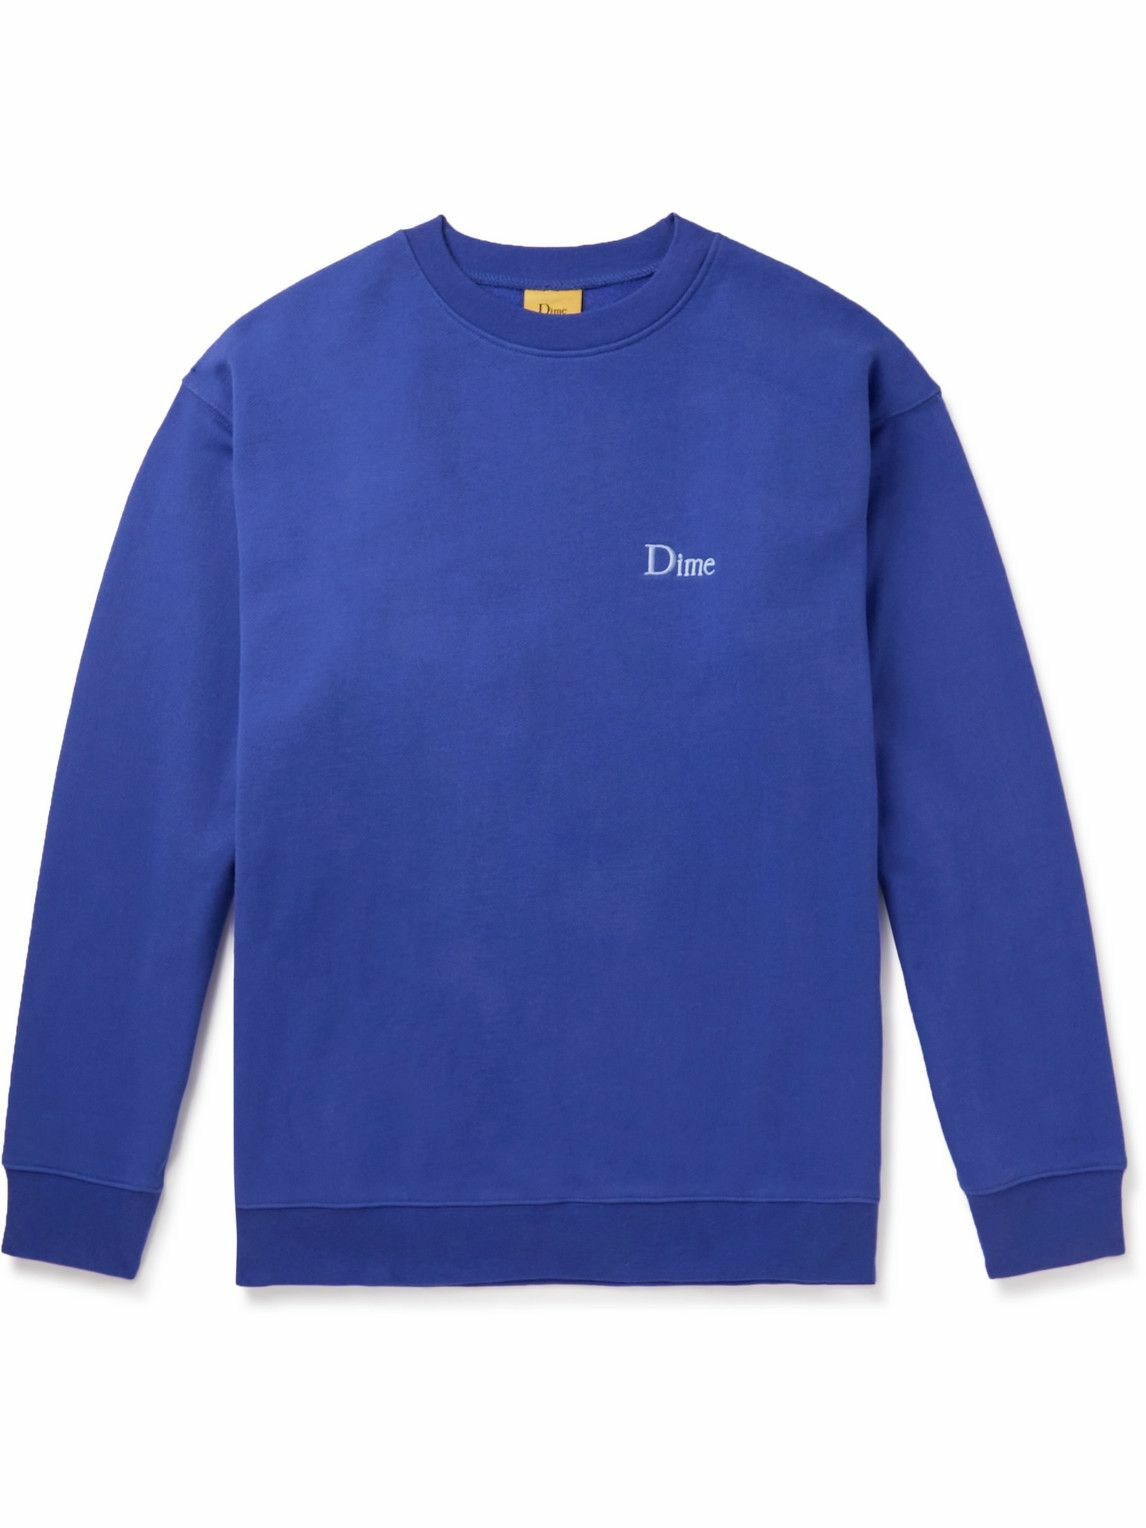 DIME - Logo-Embroidered Cotton-Jersey Sweatshirt - Blue Dime